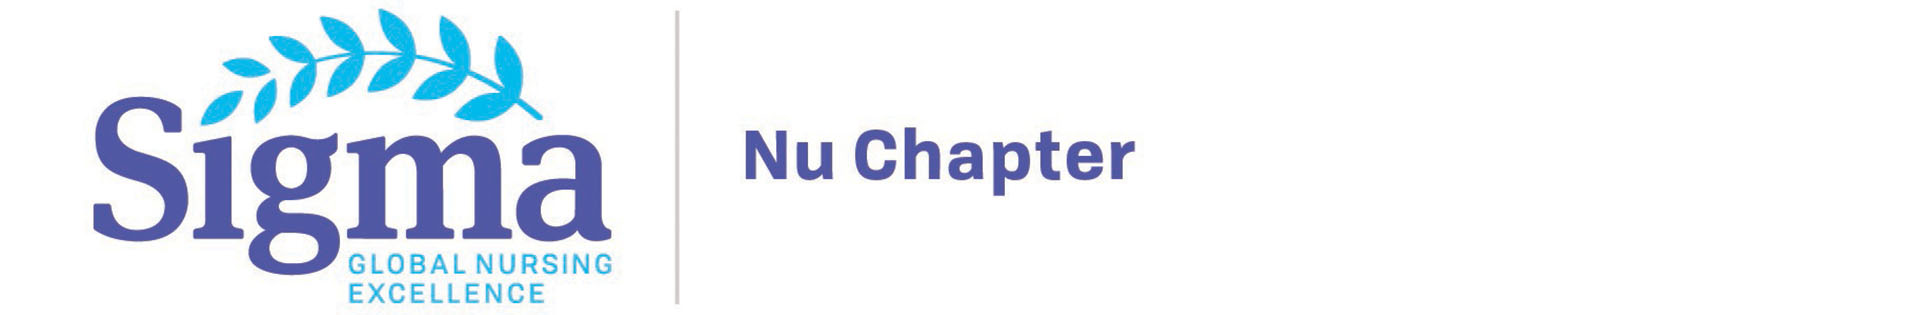 Sigman Nu chapter logo